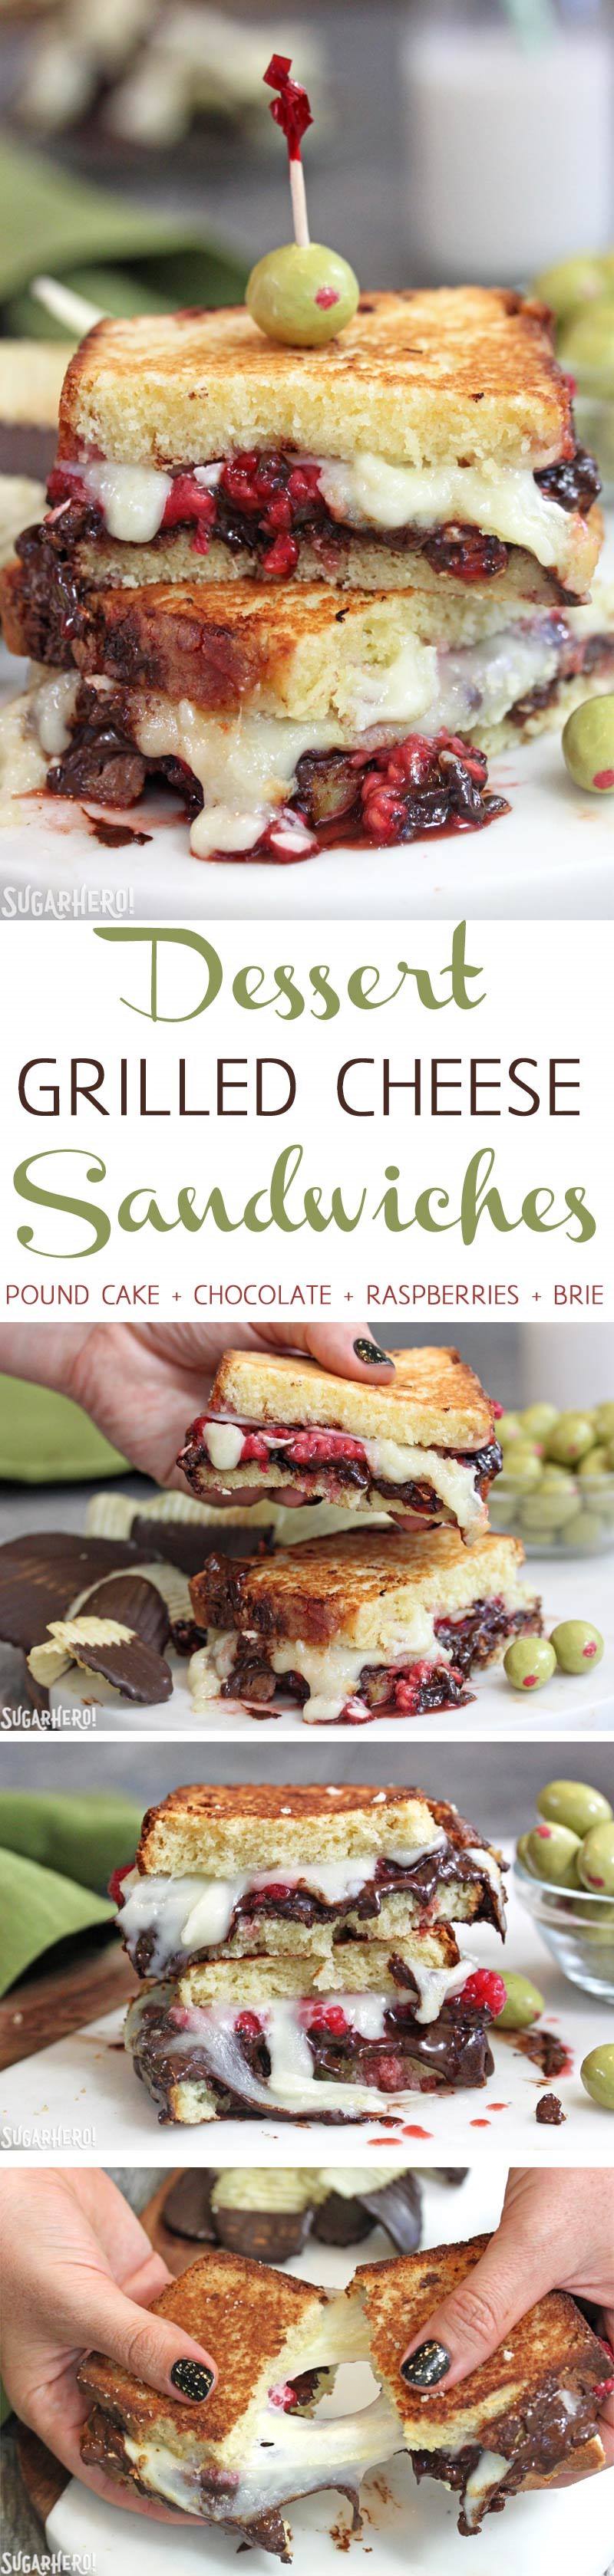 Dessert Grilled Cheese Sandwiches | From SugarHero.com